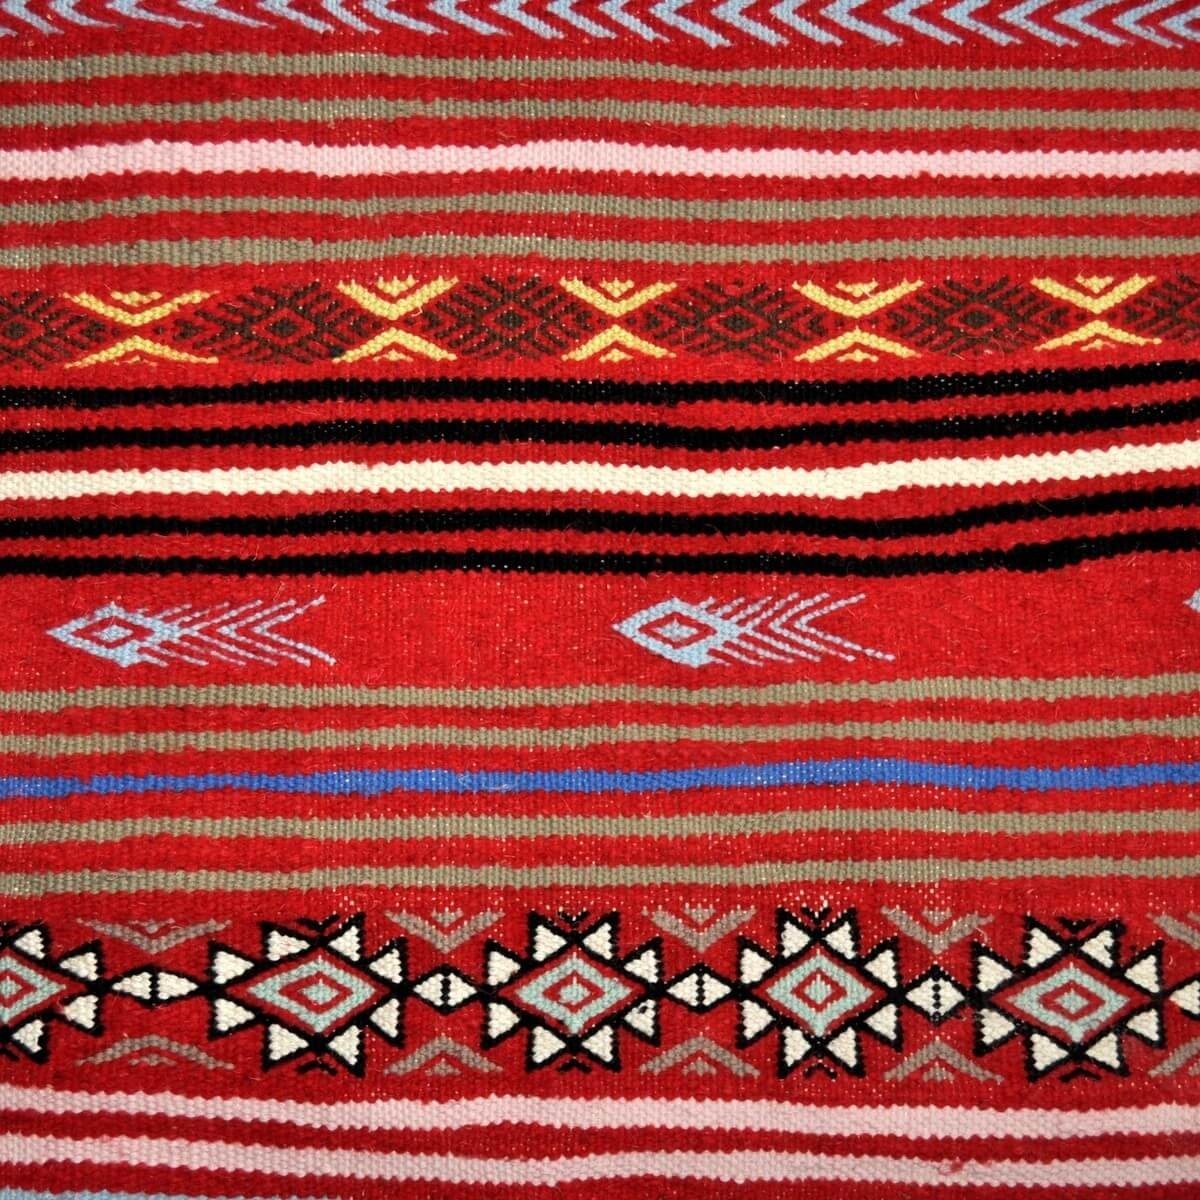 Berber tapijt Tapijt Kilim lang Aljerid 75x195 Rood (Handgeweven, Wol, Tunesië) Tunesisch kilimdeken, Marokkaanse stijl. Rechtho